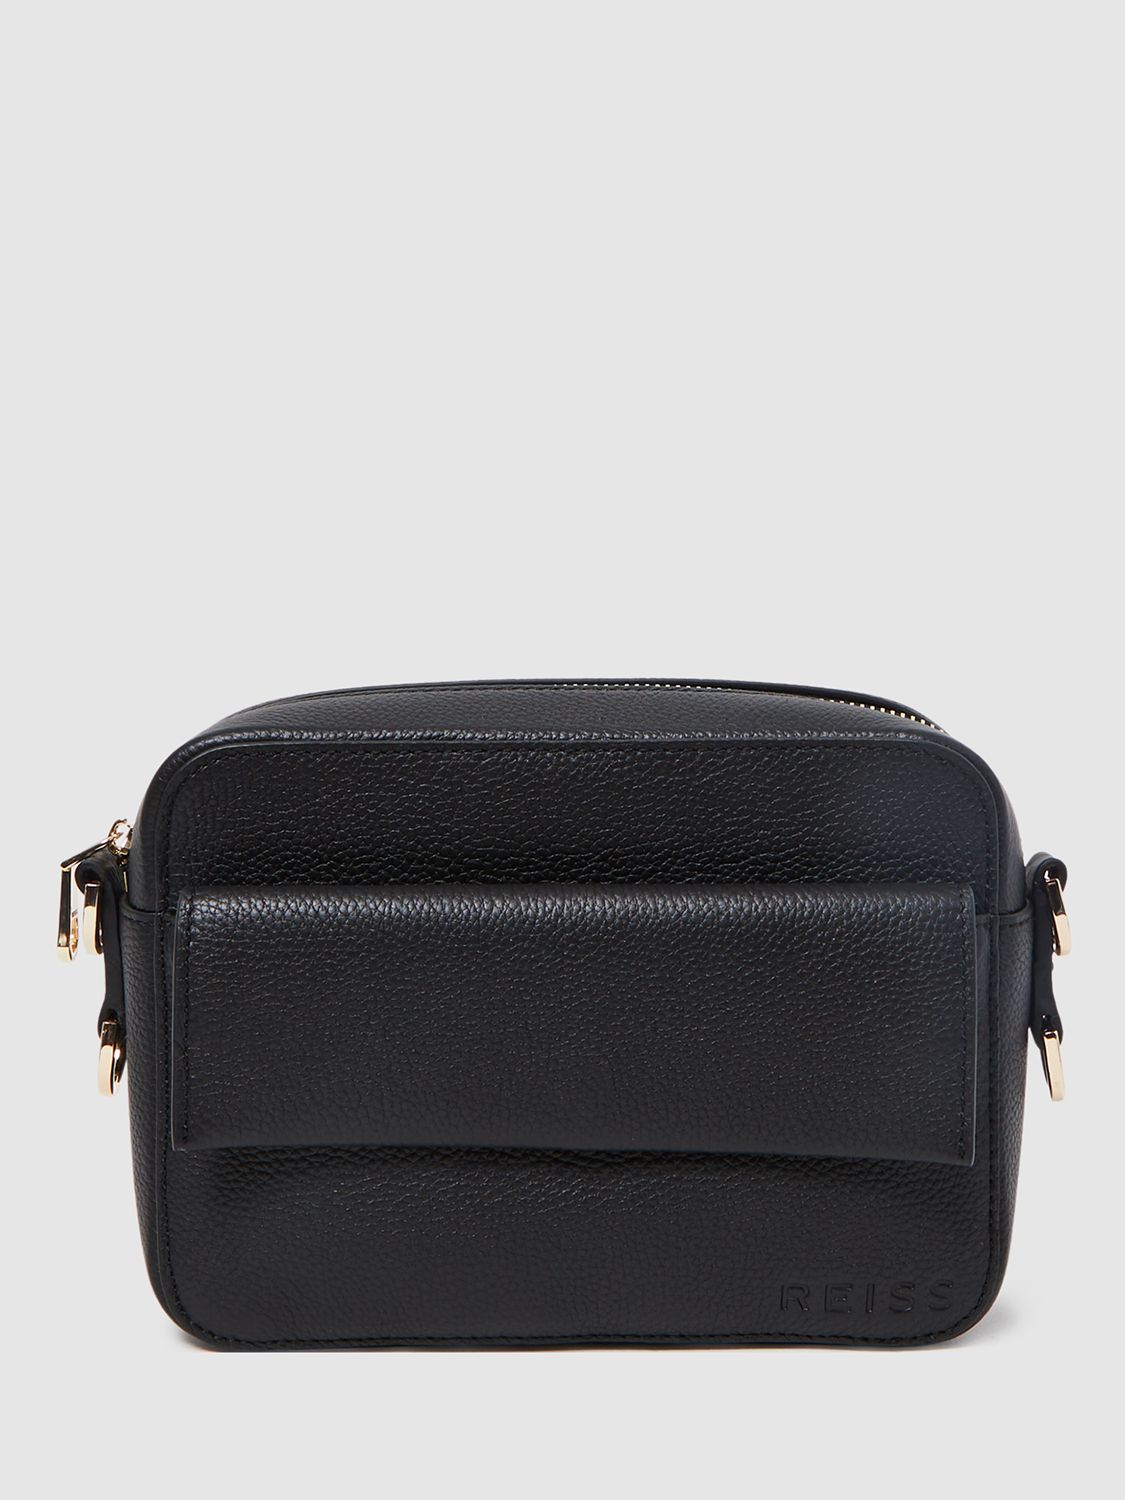 Reiss Clea Leather Cross Body Camera Bag, Black at John Lewis & Partners